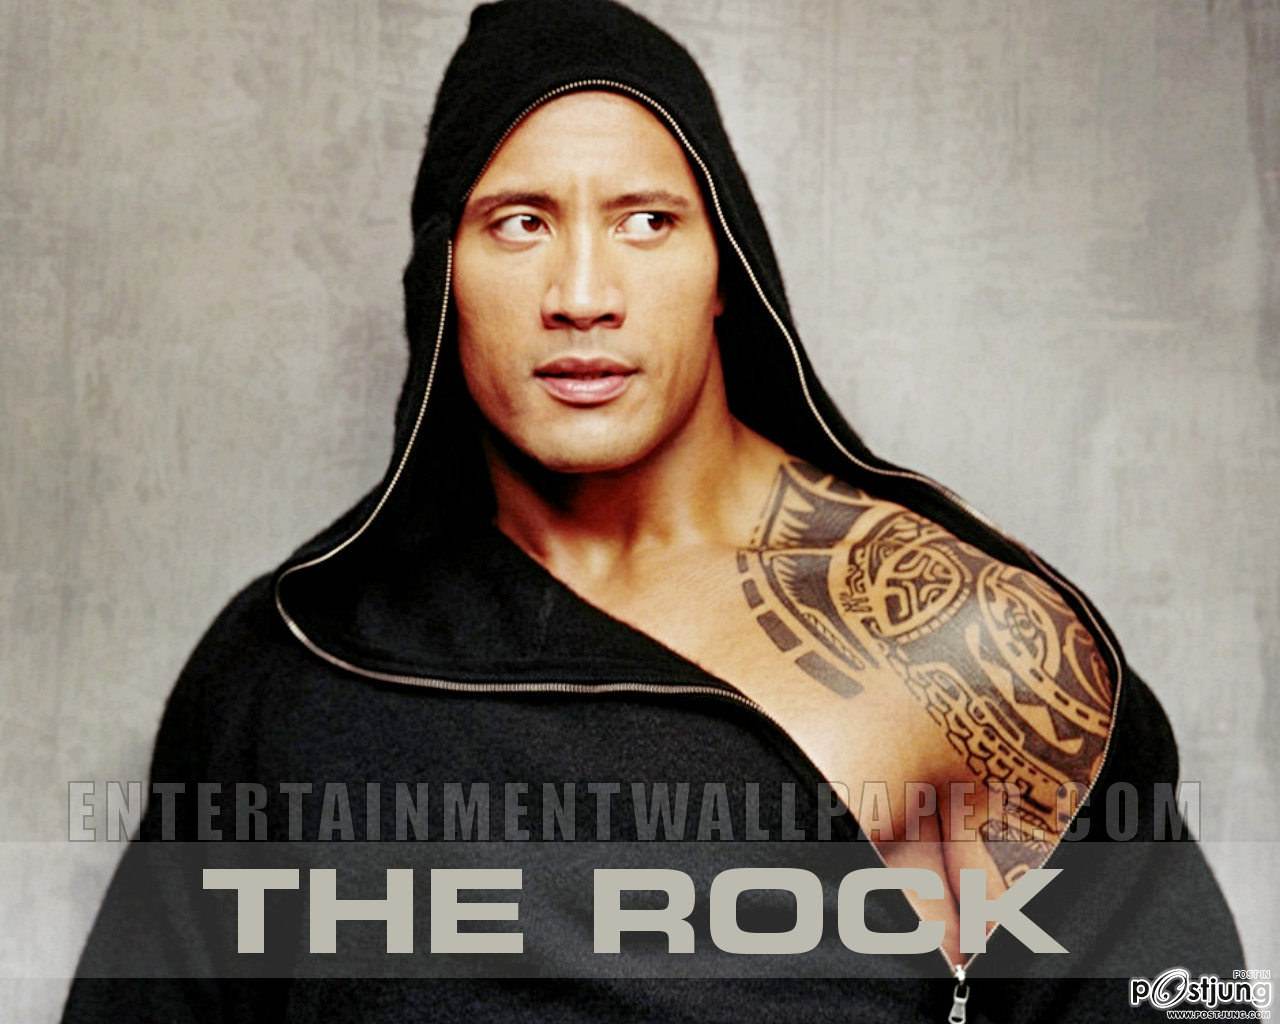 +++ The Rock WWE +++